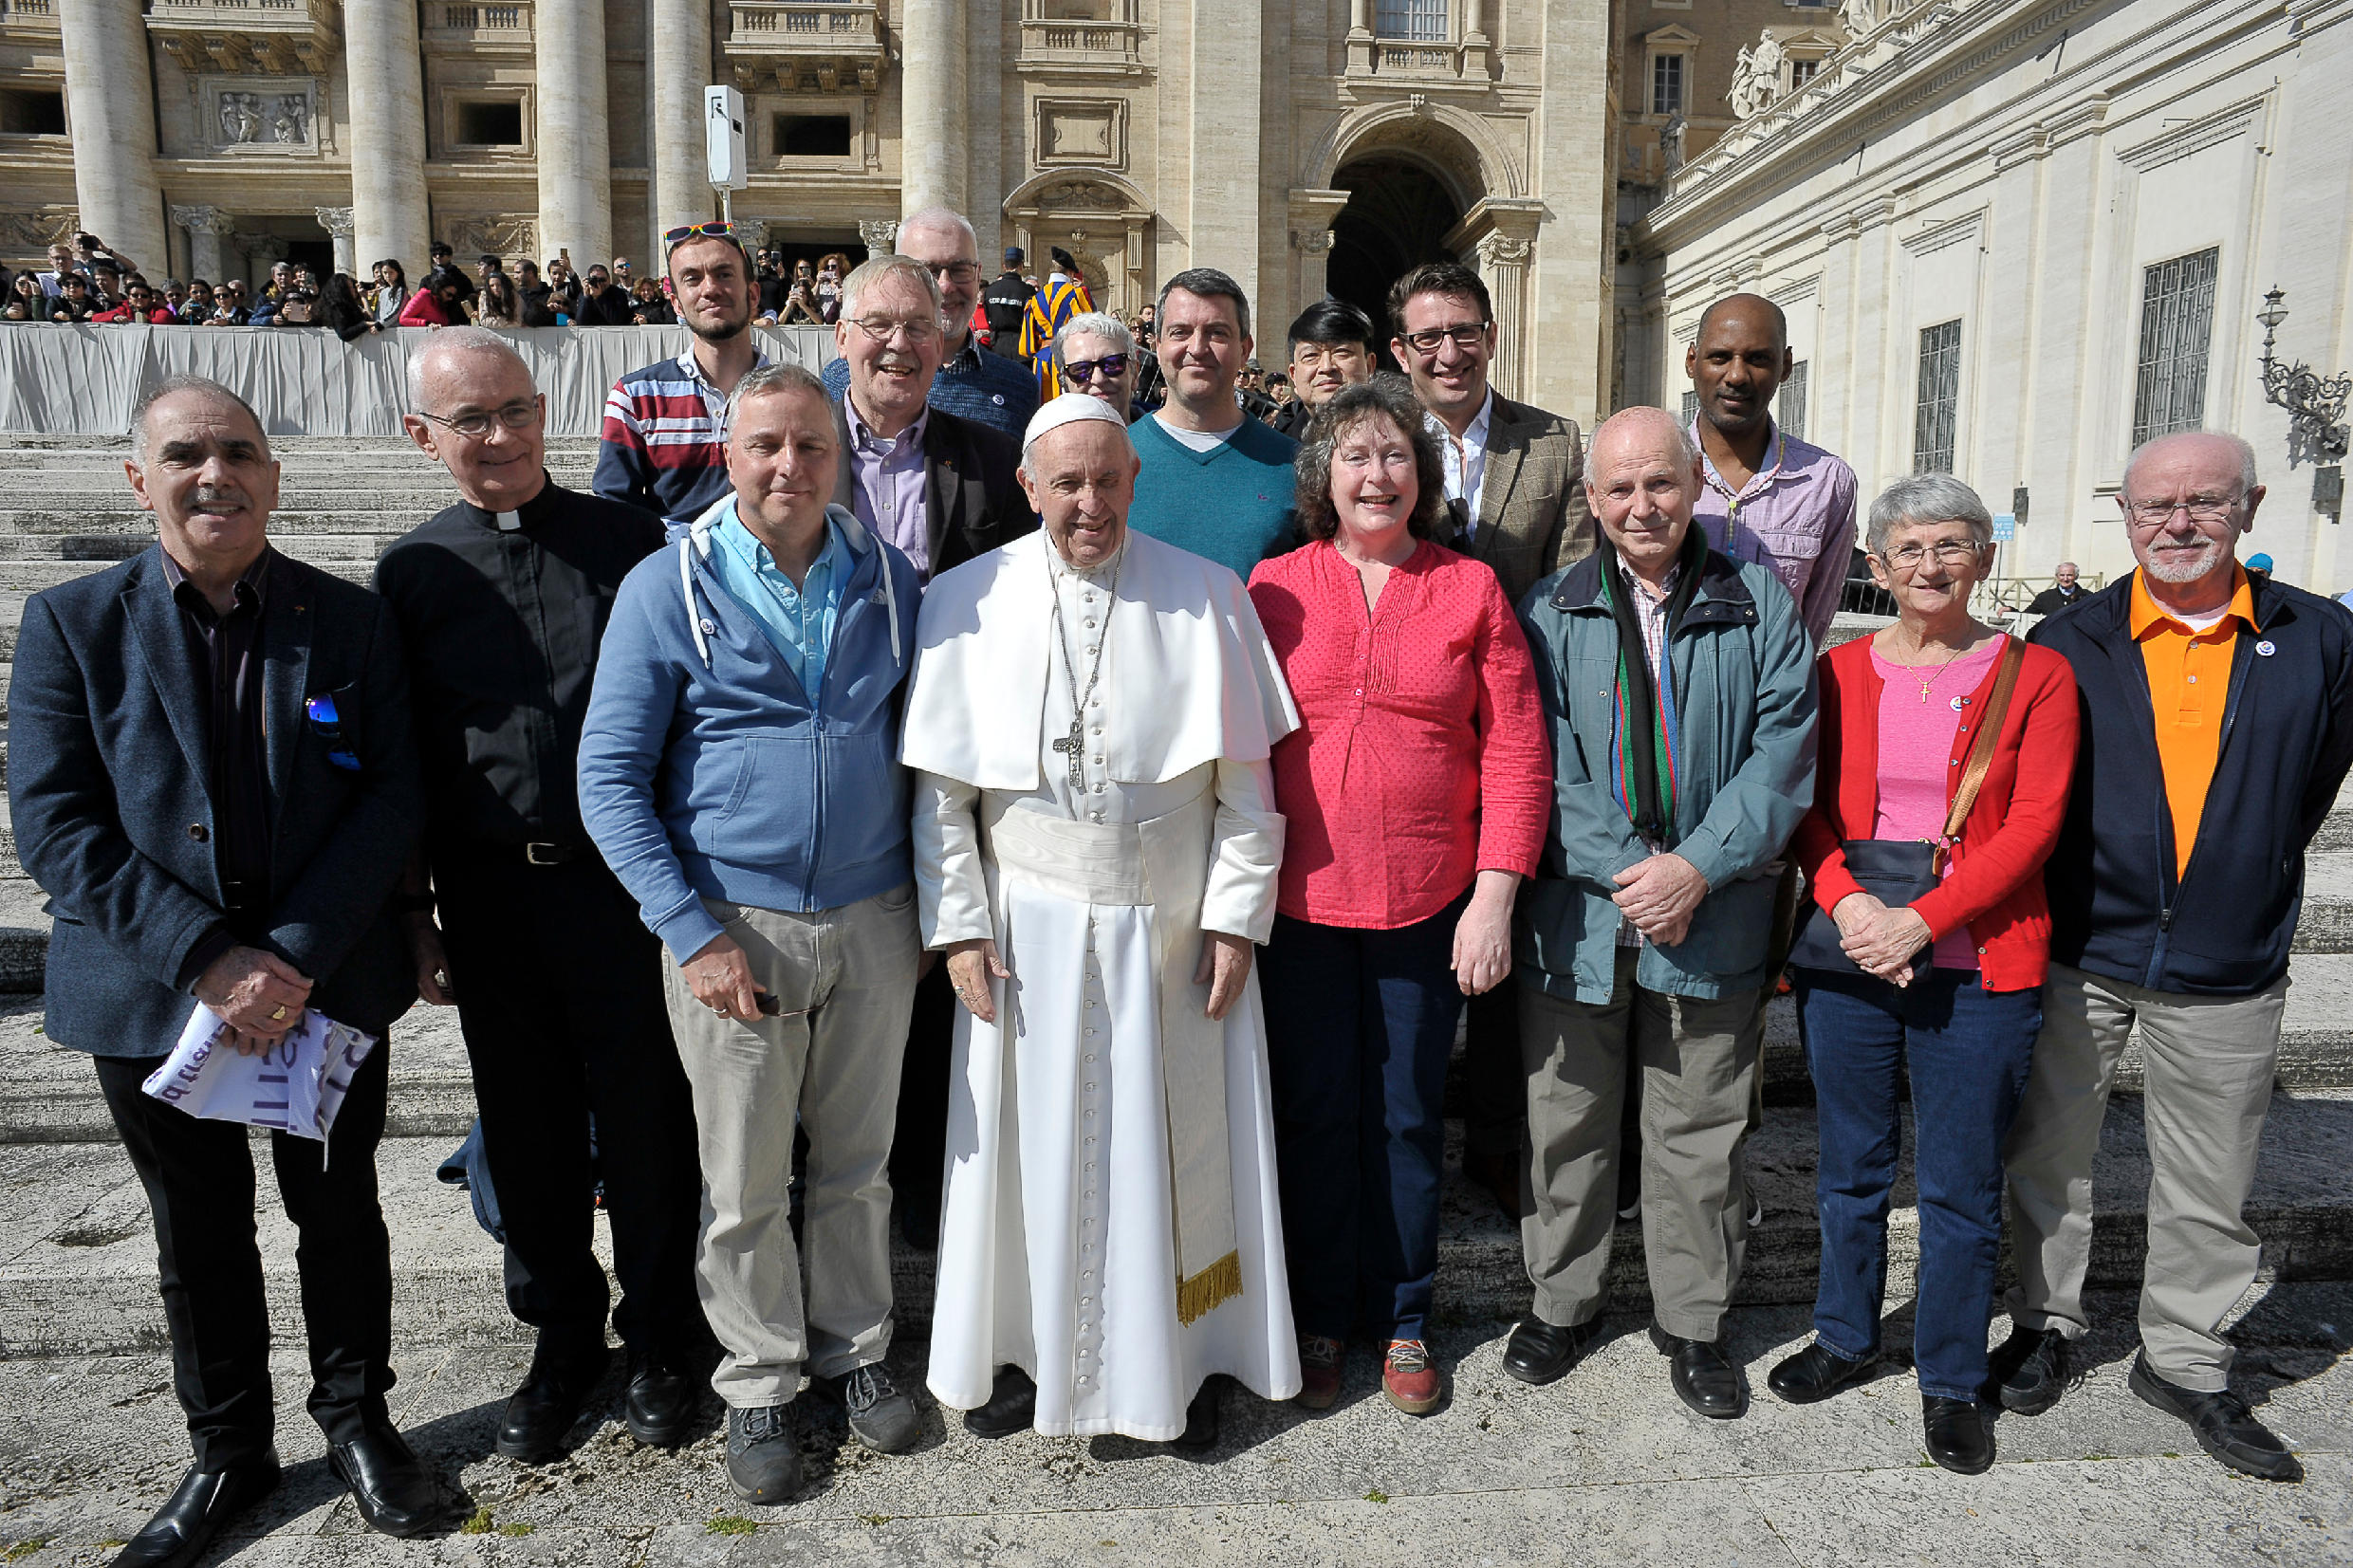 LGBT Catholics Westminster meet Pope Francis 